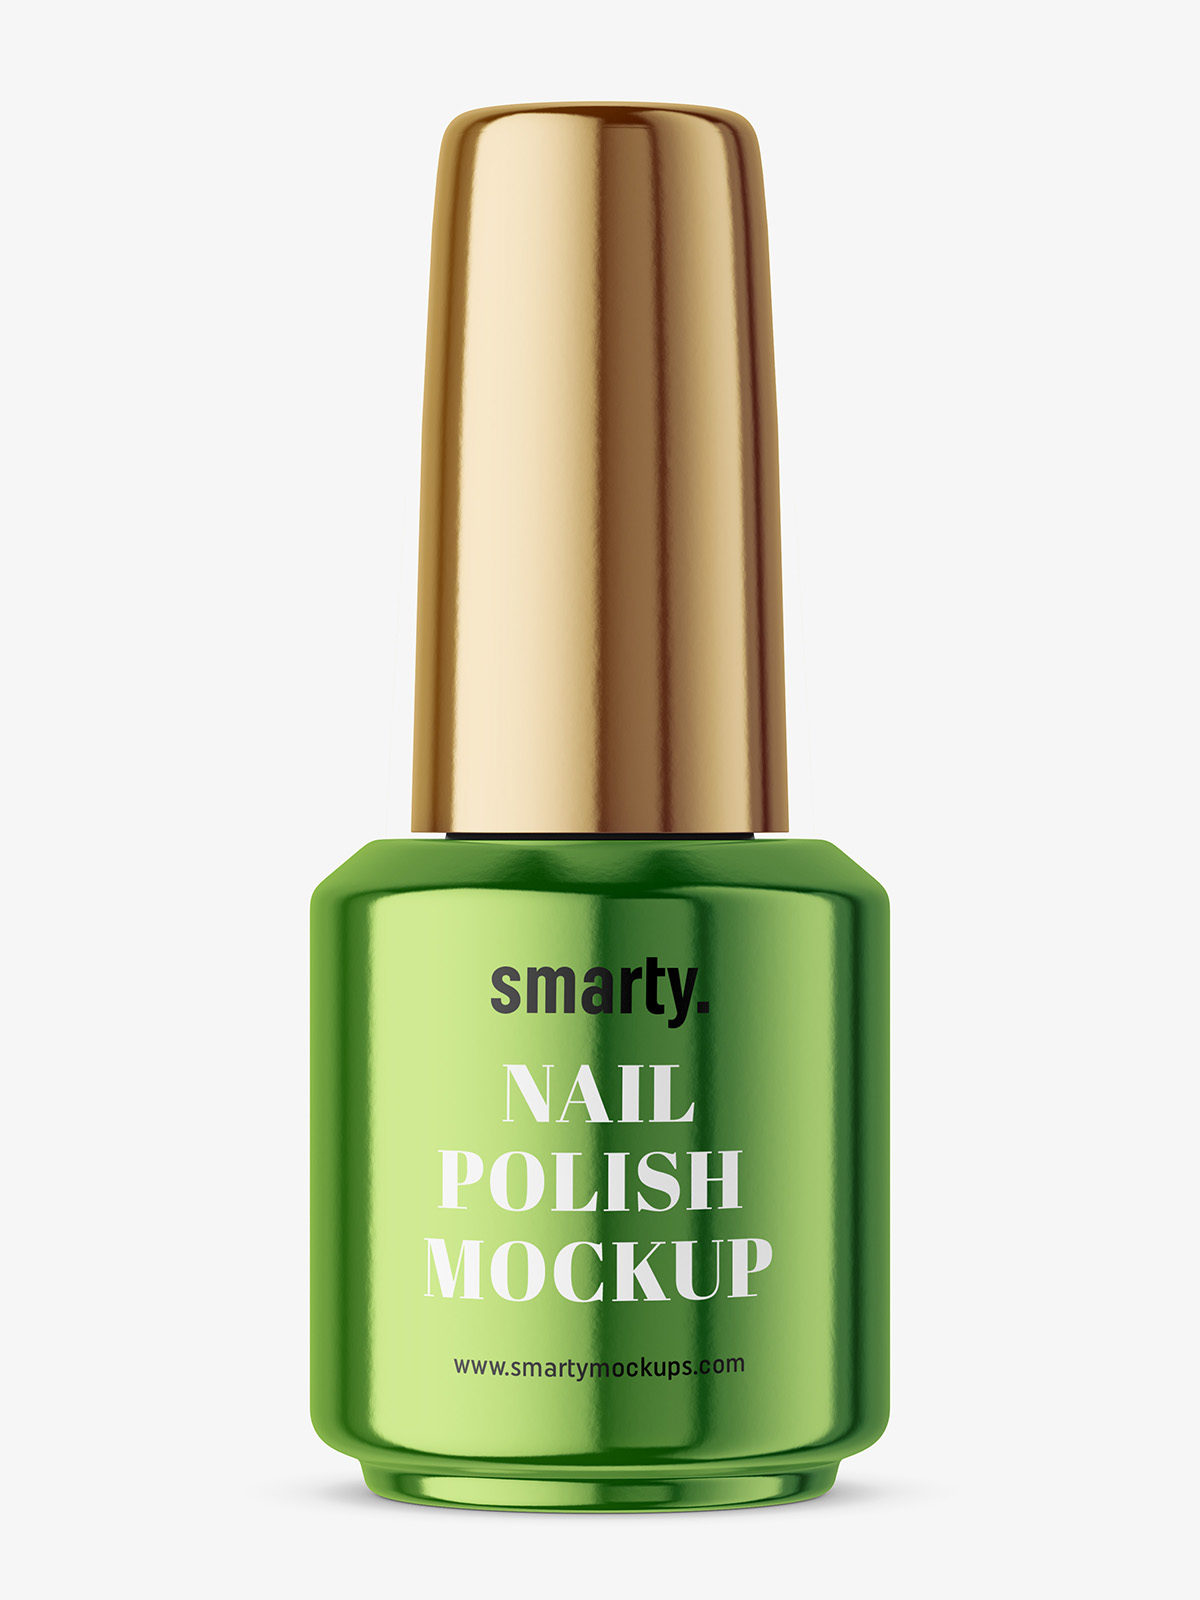 Download Metallic nail polish bottle mockup - Smarty Mockups